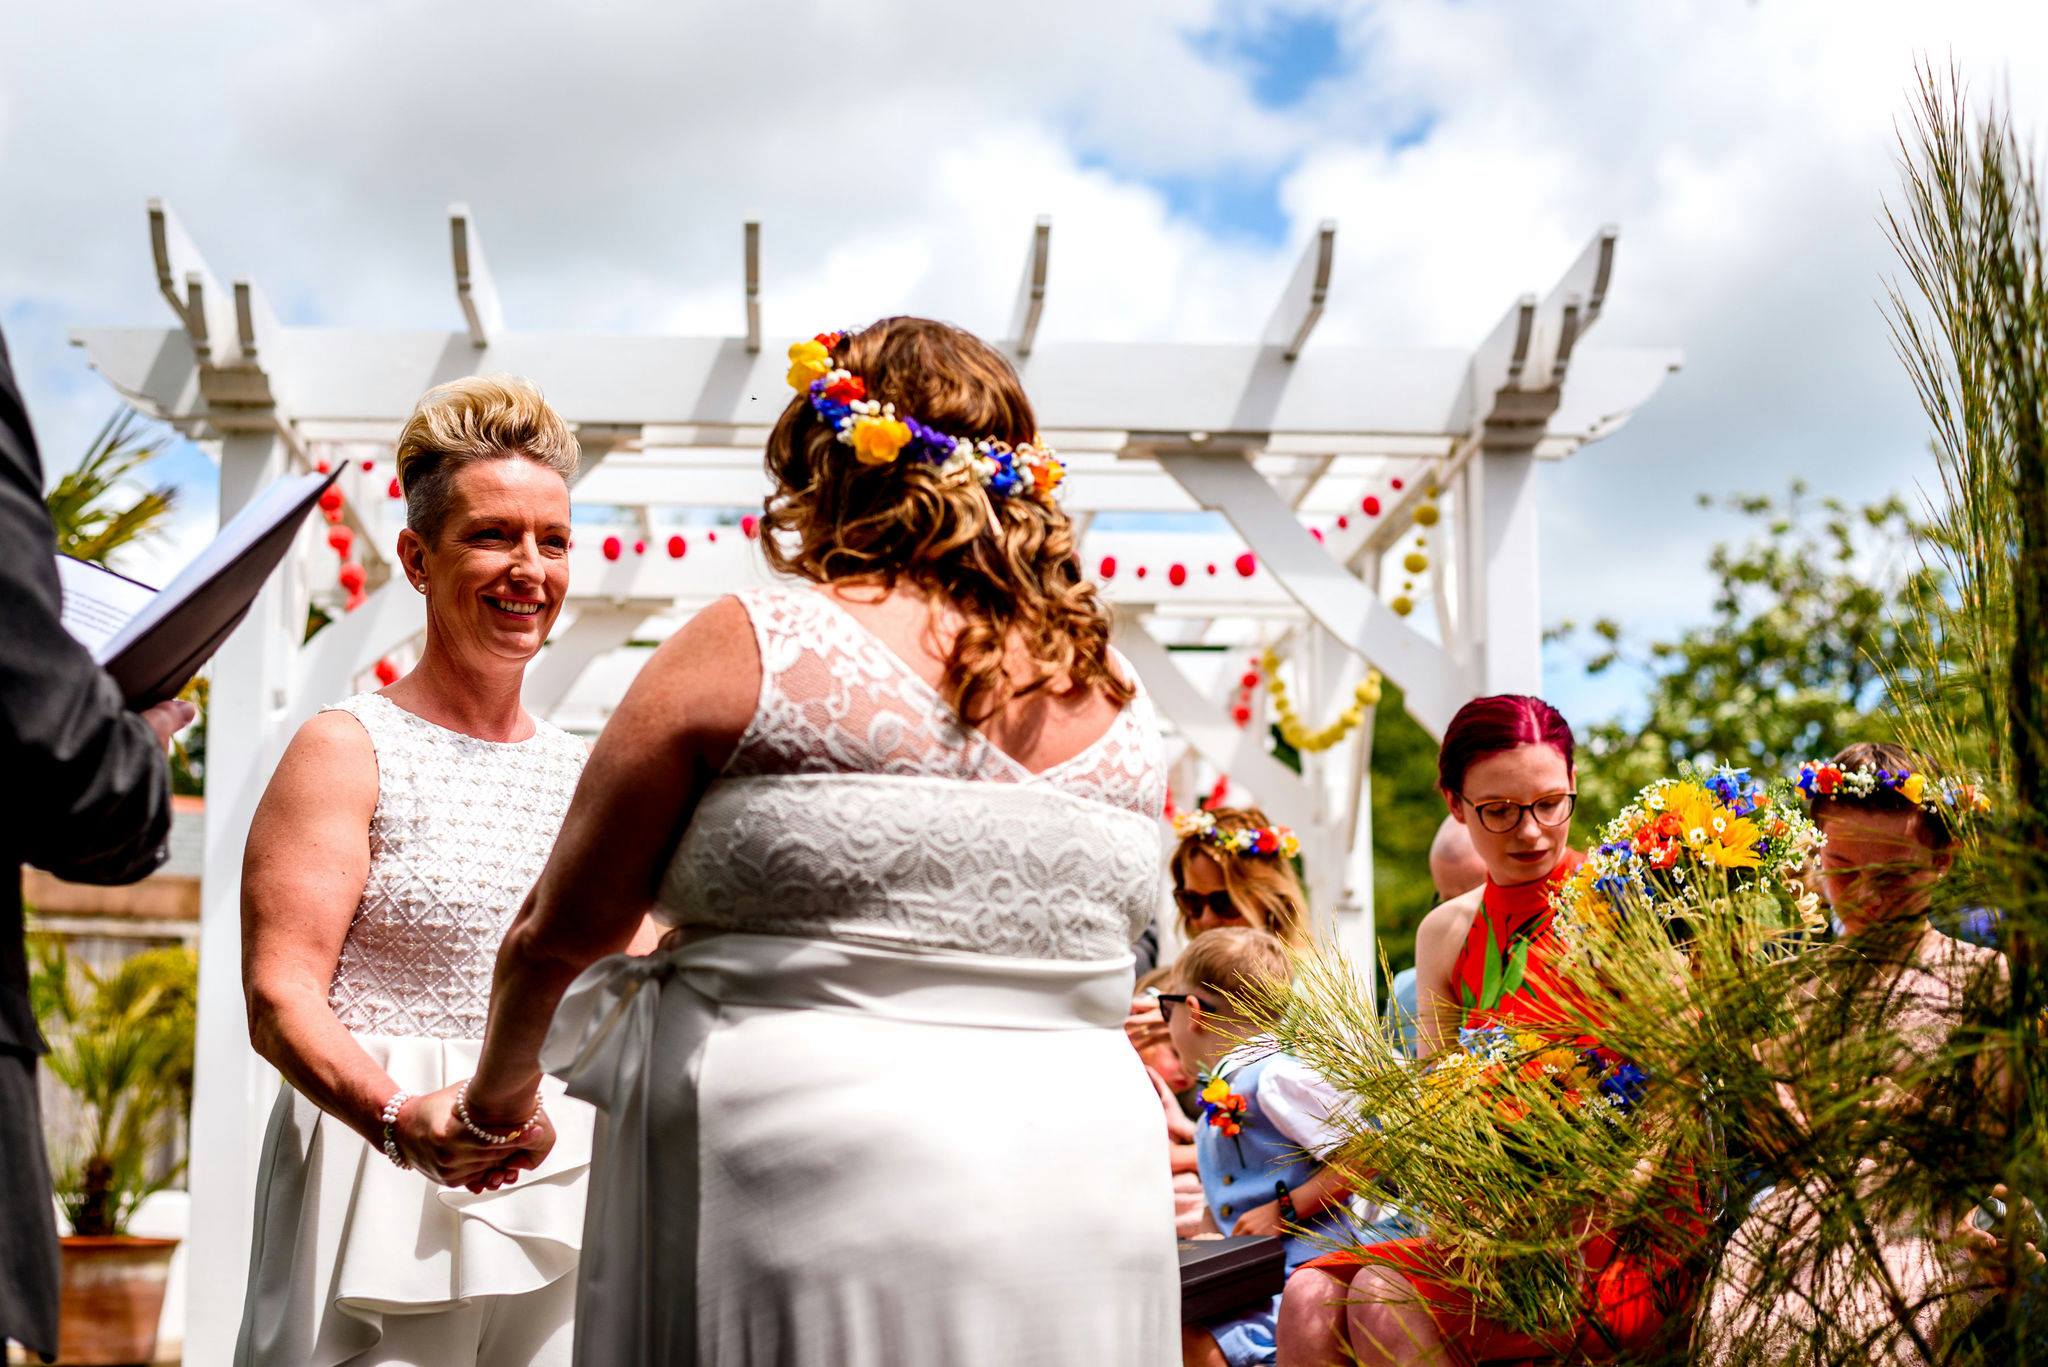 Lower Barns - Cornwall Gay Elopement Weddings